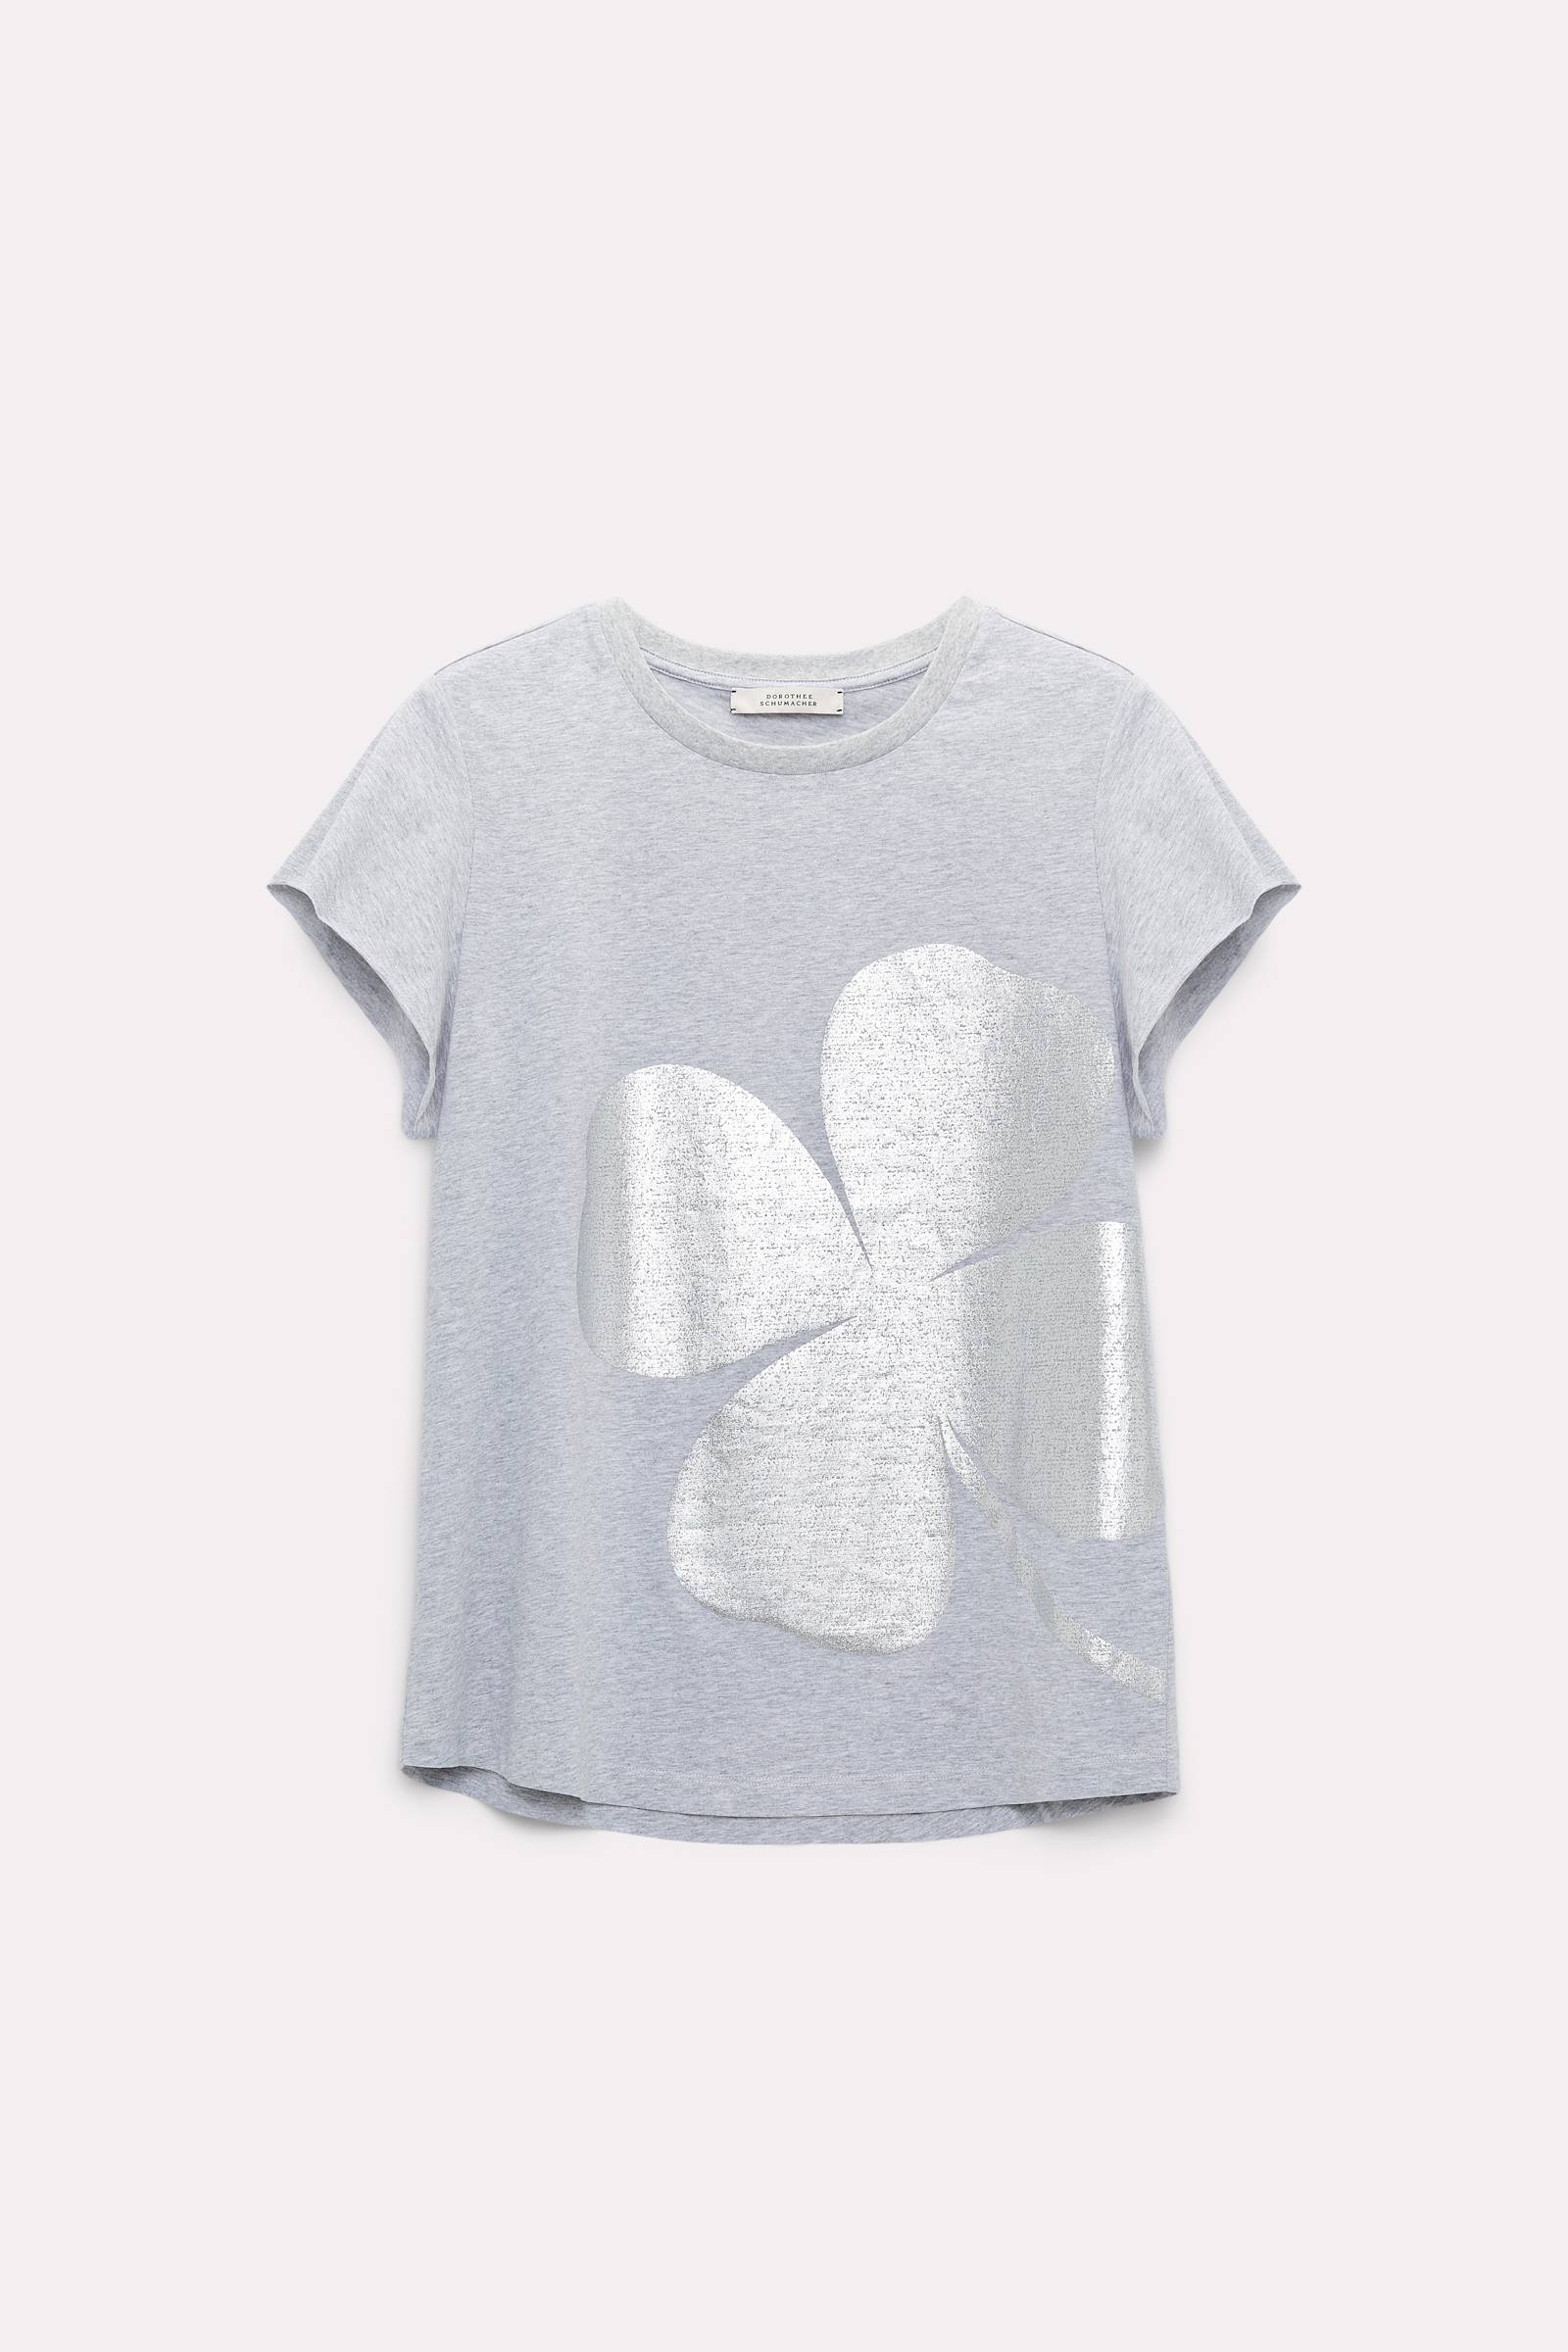 Dorothee Schumacher T-shirt with metallic print grey melange with silver print